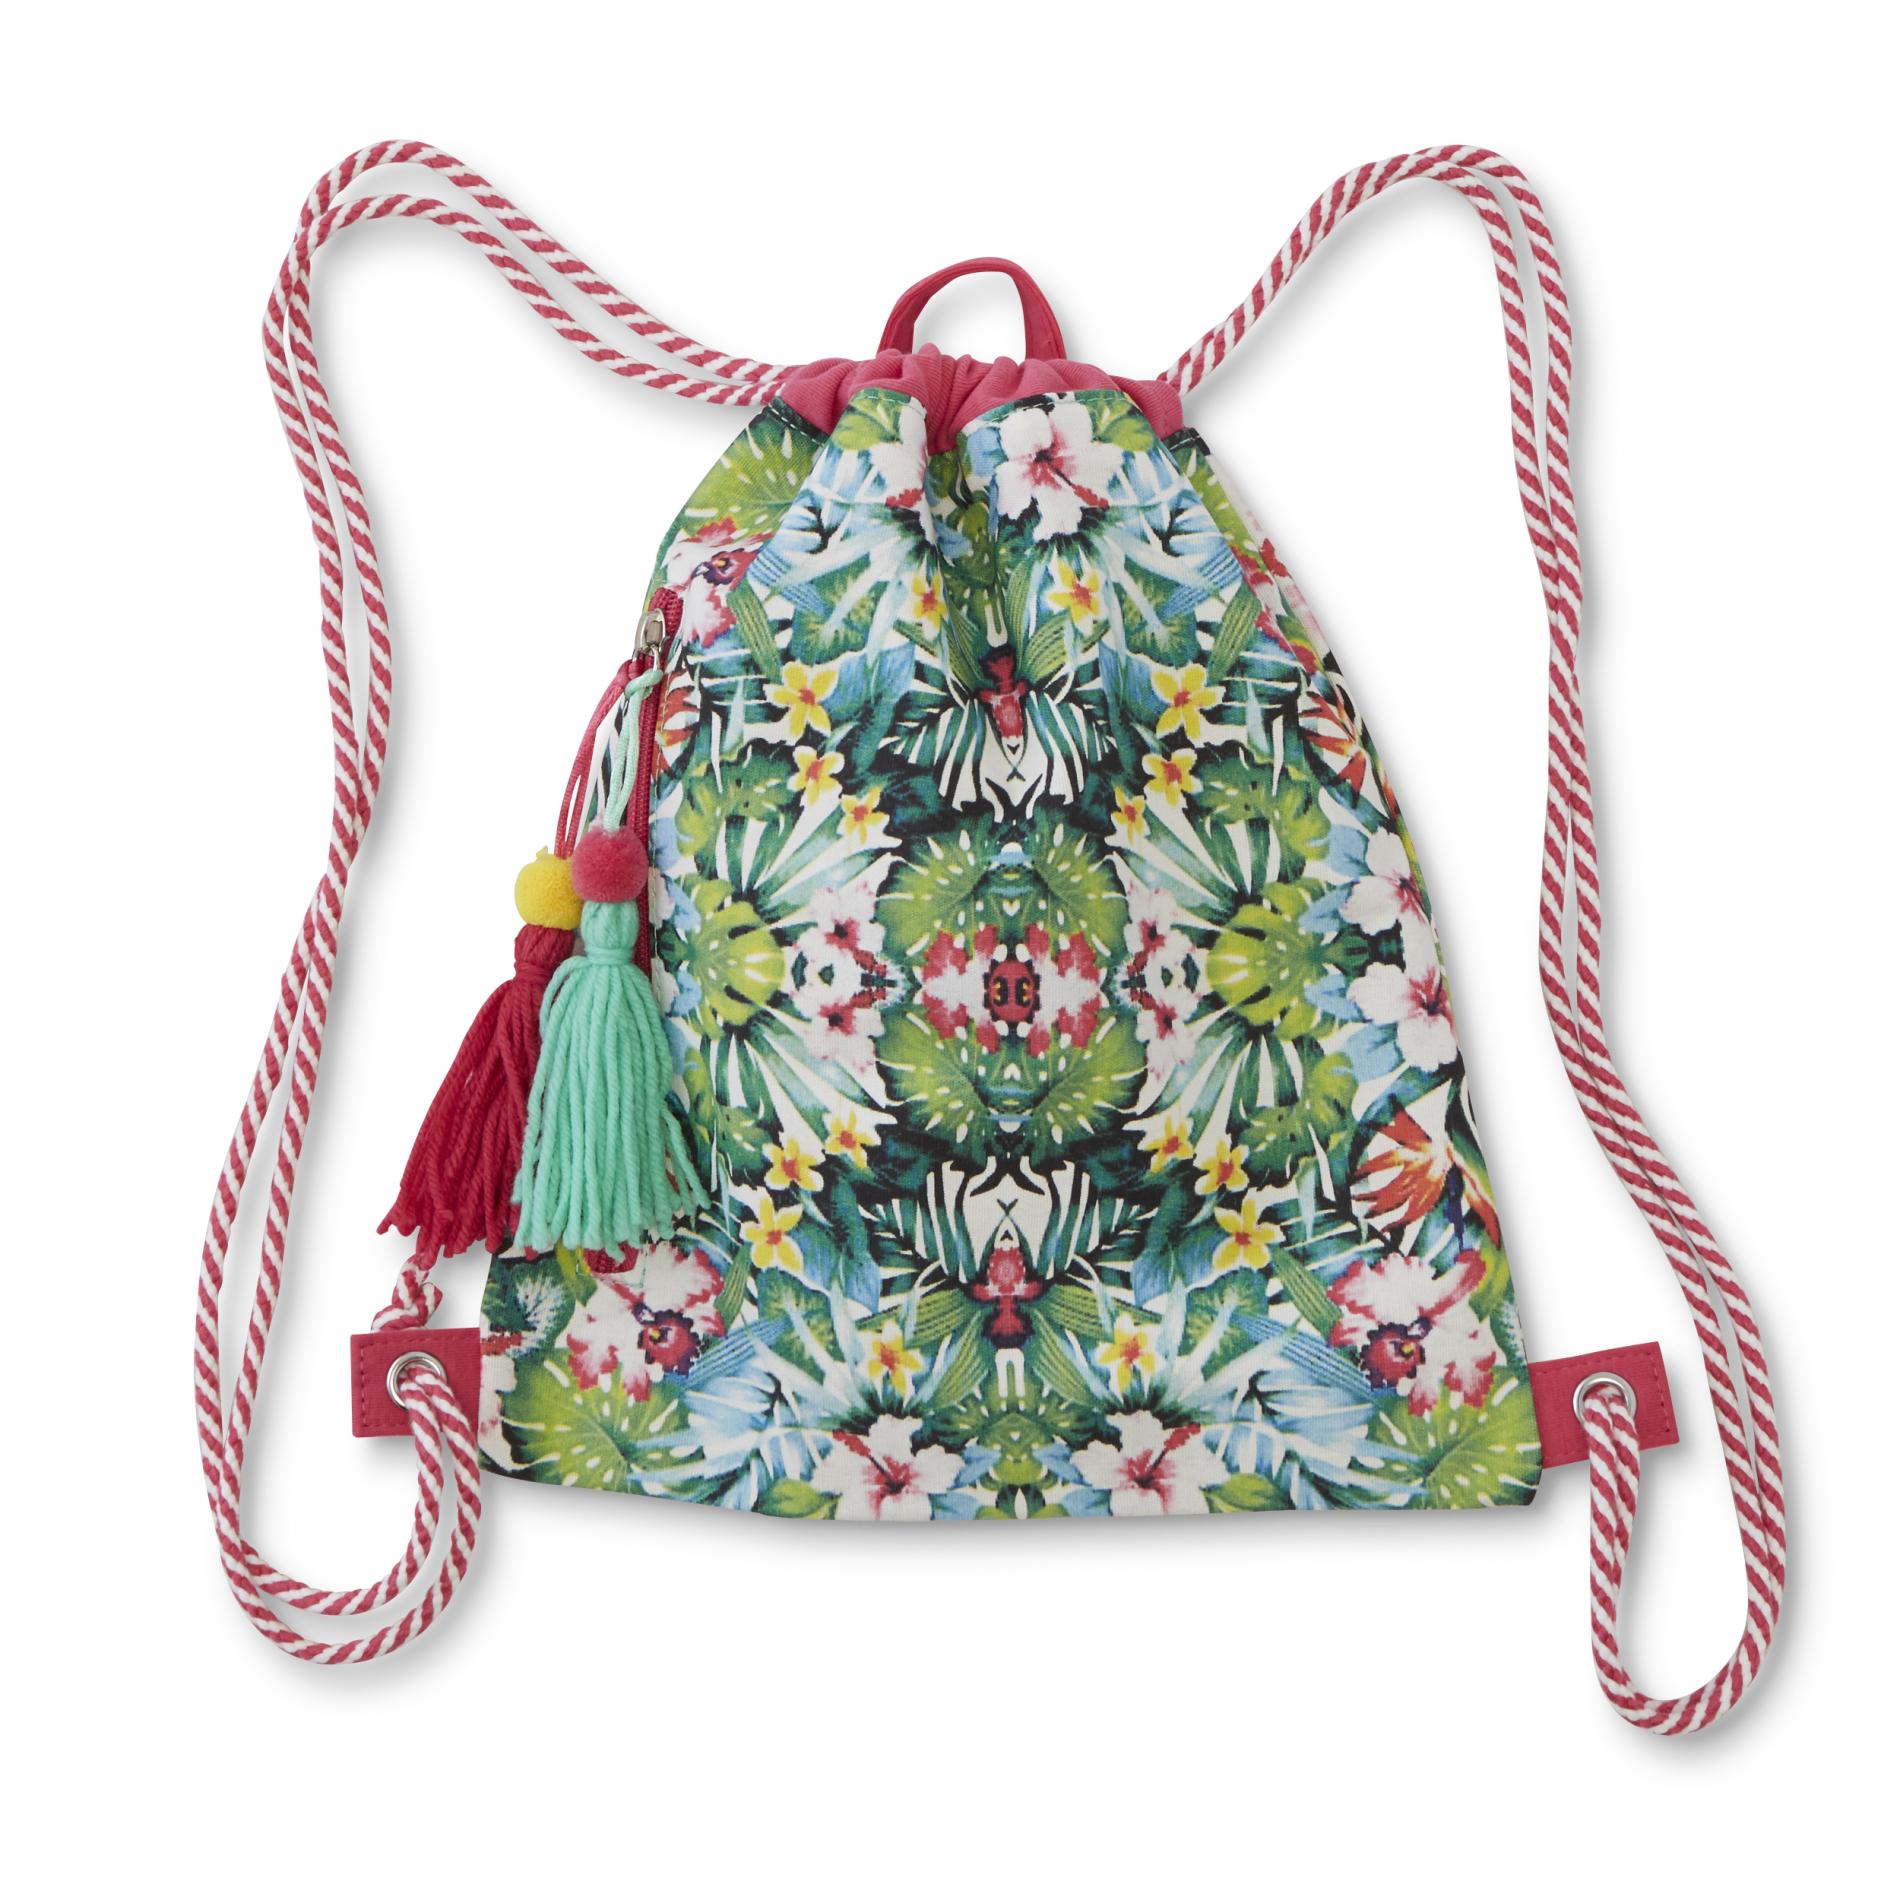 Girls' Backpack Purse - Floral